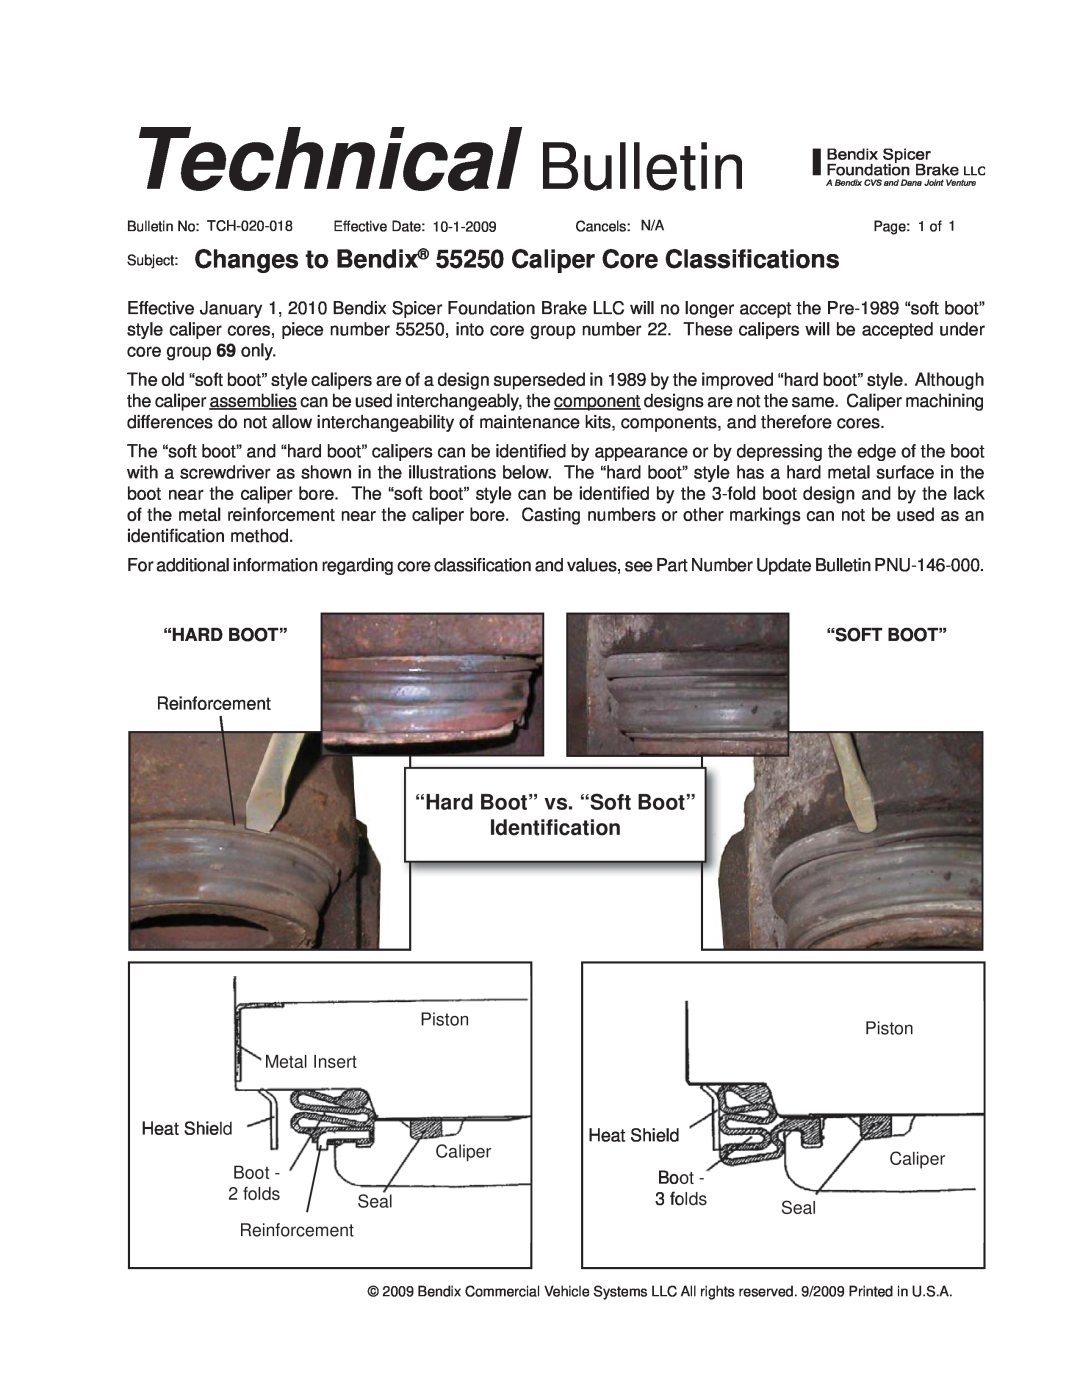 BENDIX TCH-020-018 manual Technical Bulletin, Subject Changes to Bendix 55250 Caliper Core Classiﬁcations, “Hard Boot” 